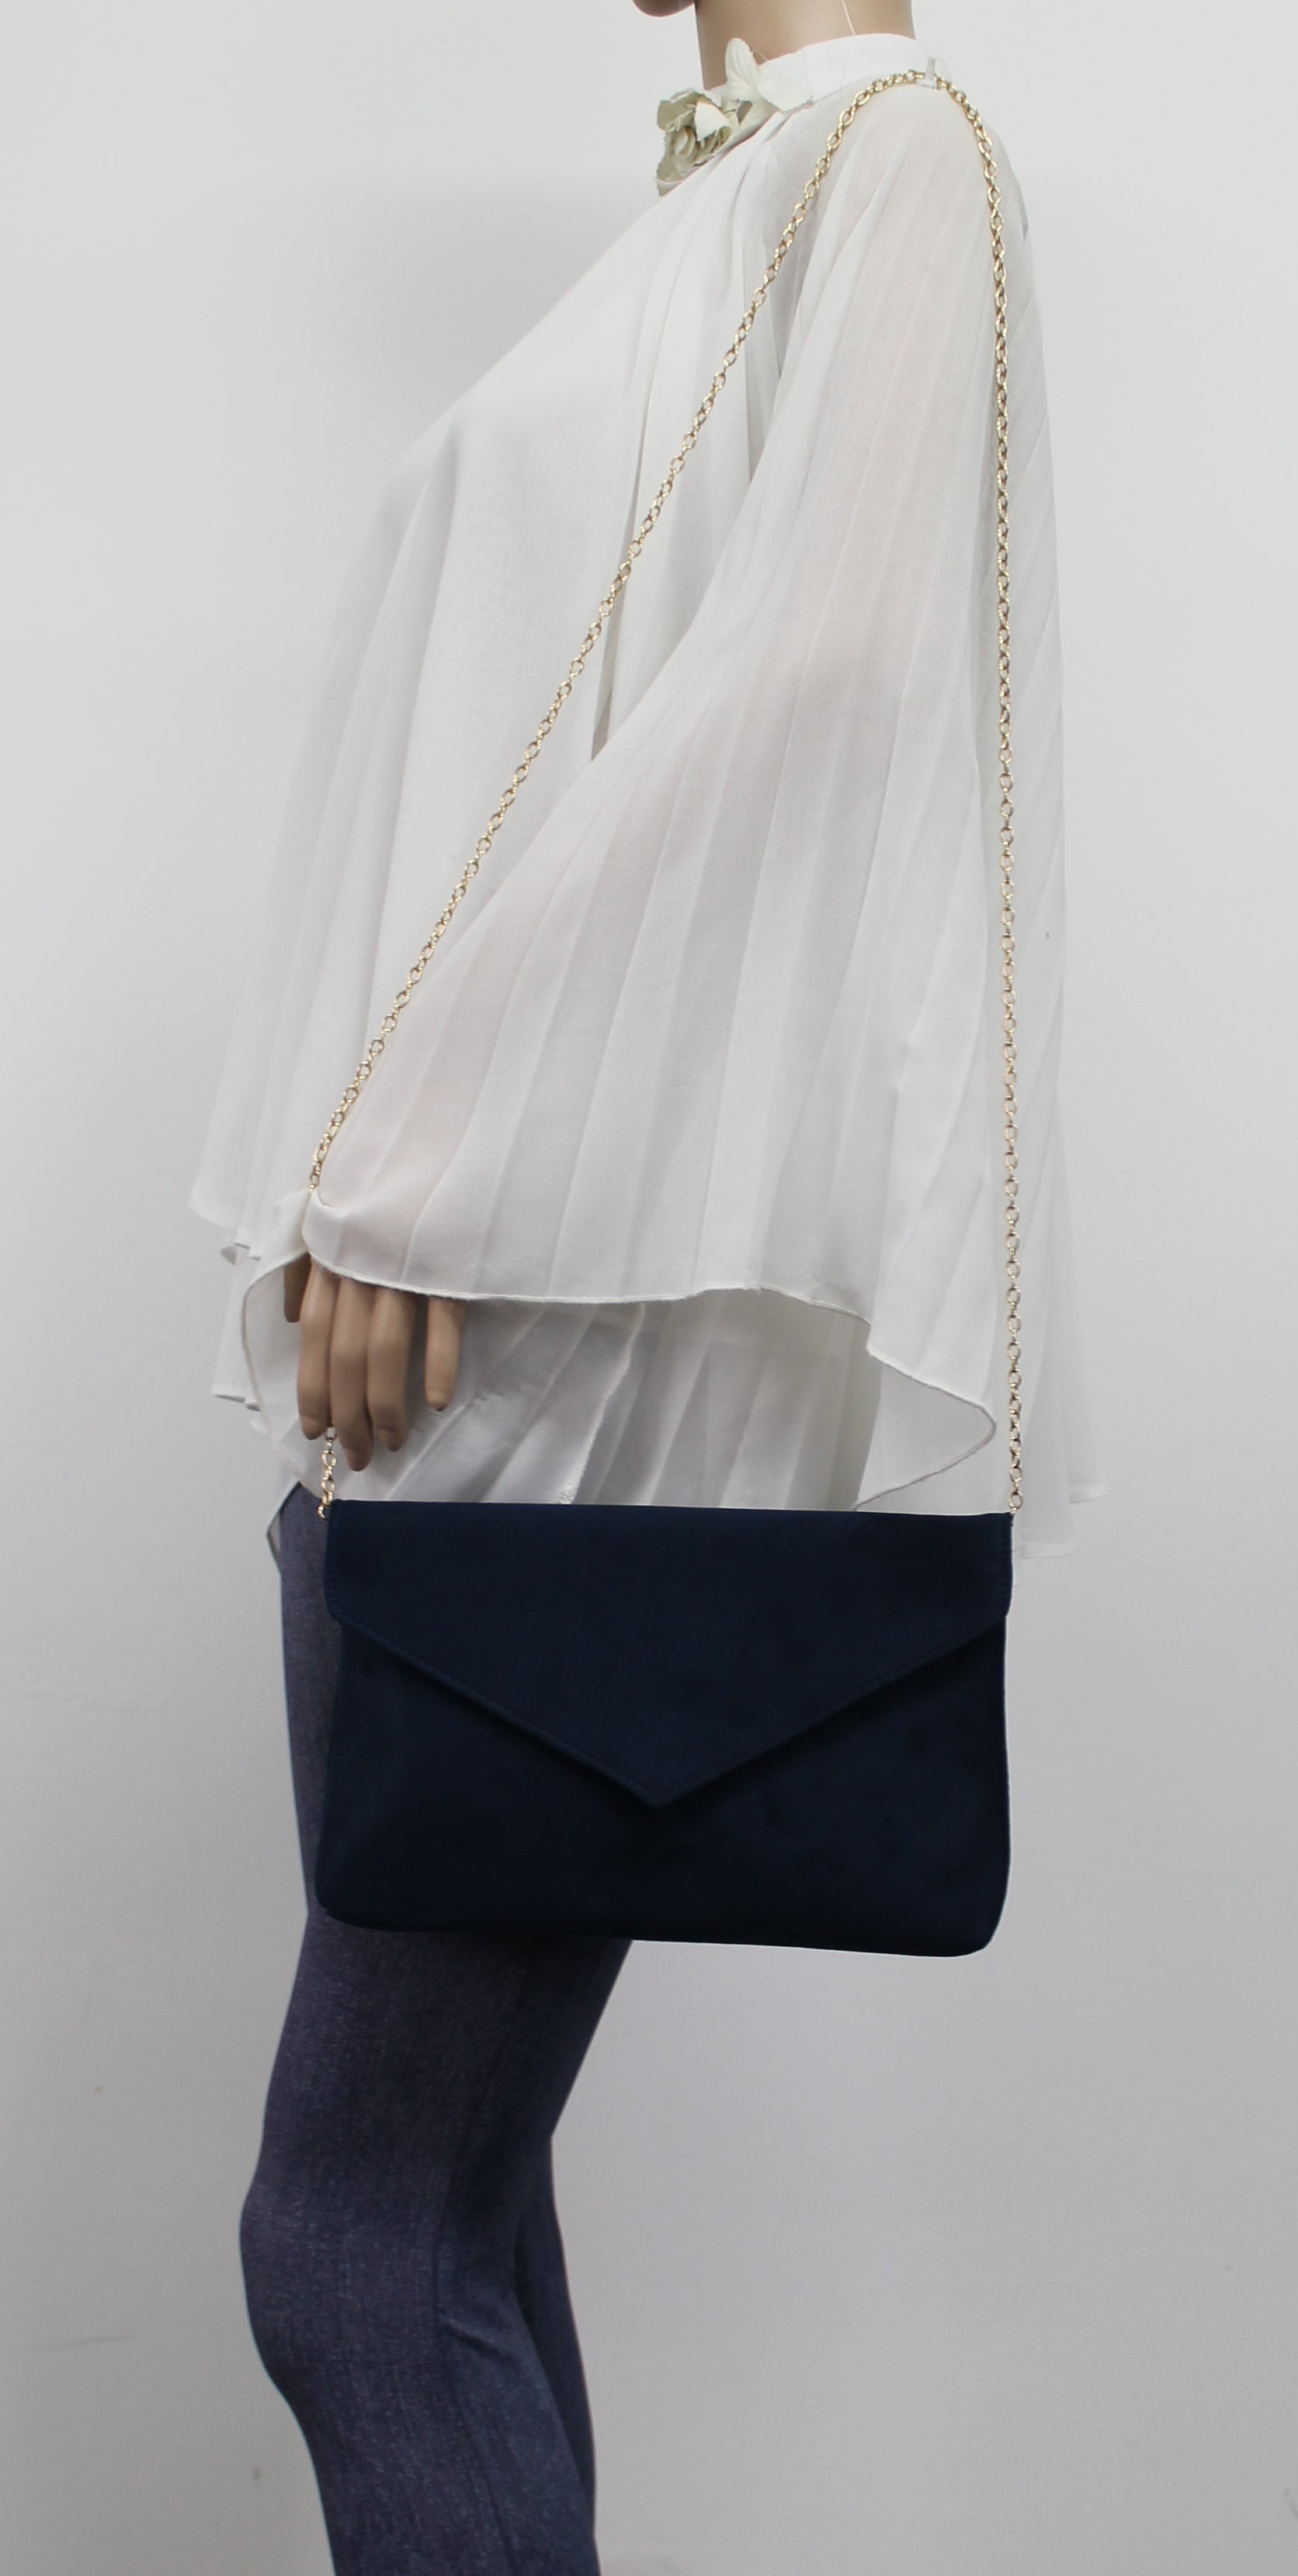 SWANKYSWANS Rosa Clutch Bag Navy Cute Cheap Clutch Bag For Weddings School and Work